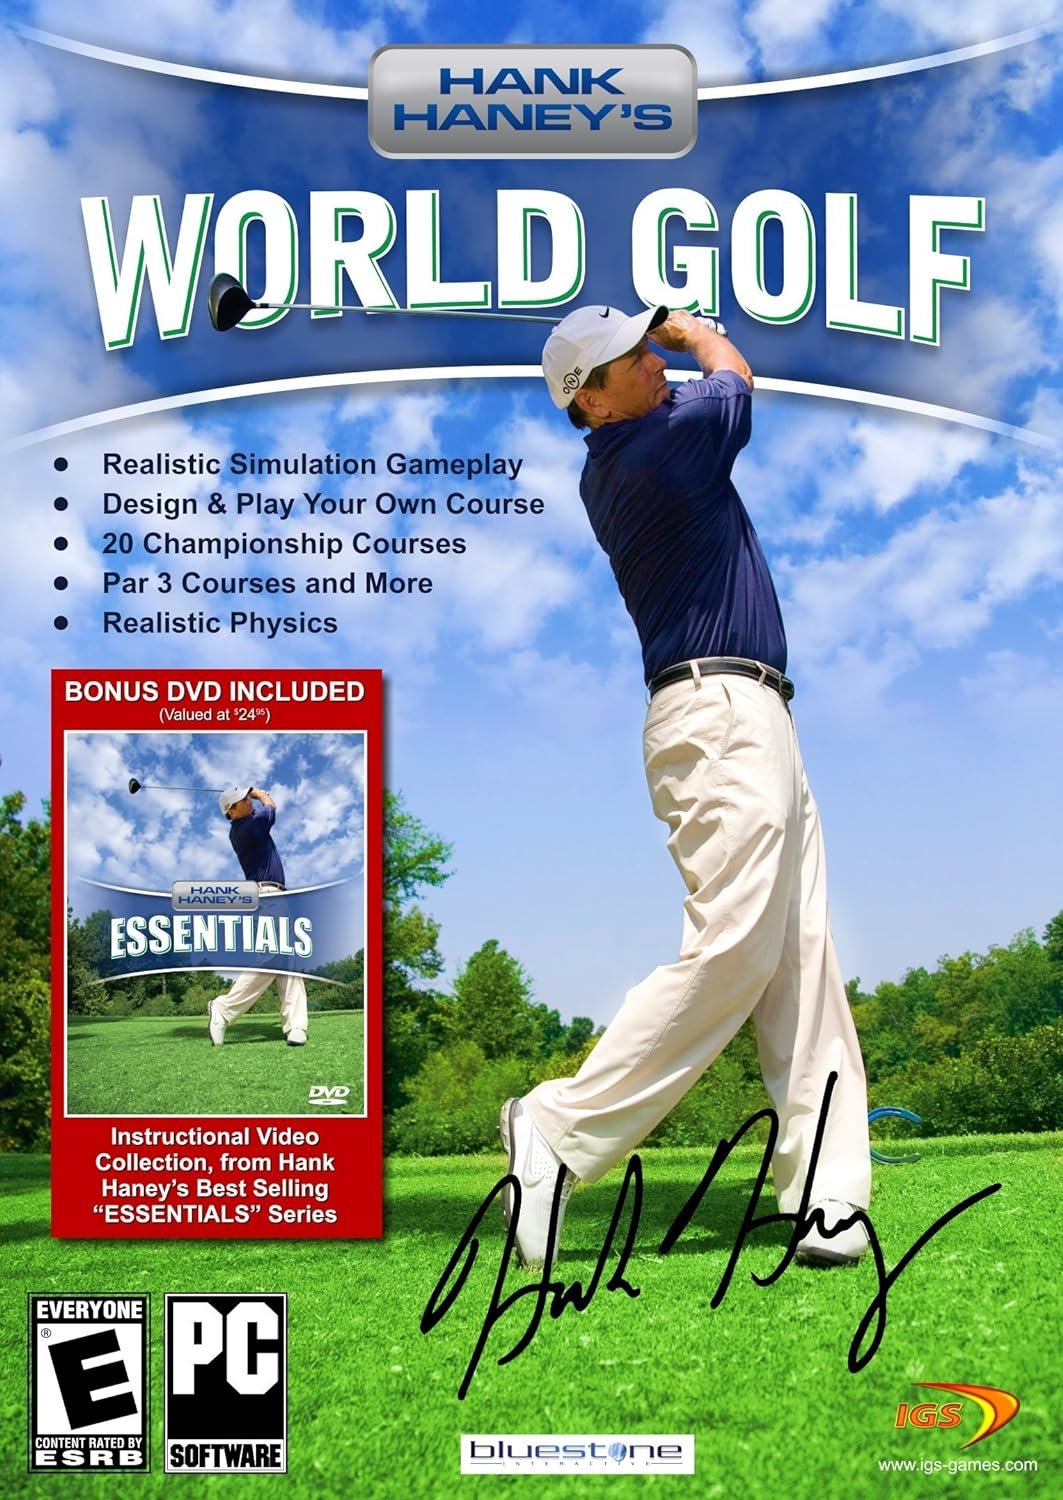 Comparing 5 Golf Products: PGA Tour 2K21, Hank Haney World Golf, VR Golf Club Handle, EXCEART Golf Tee Bulk